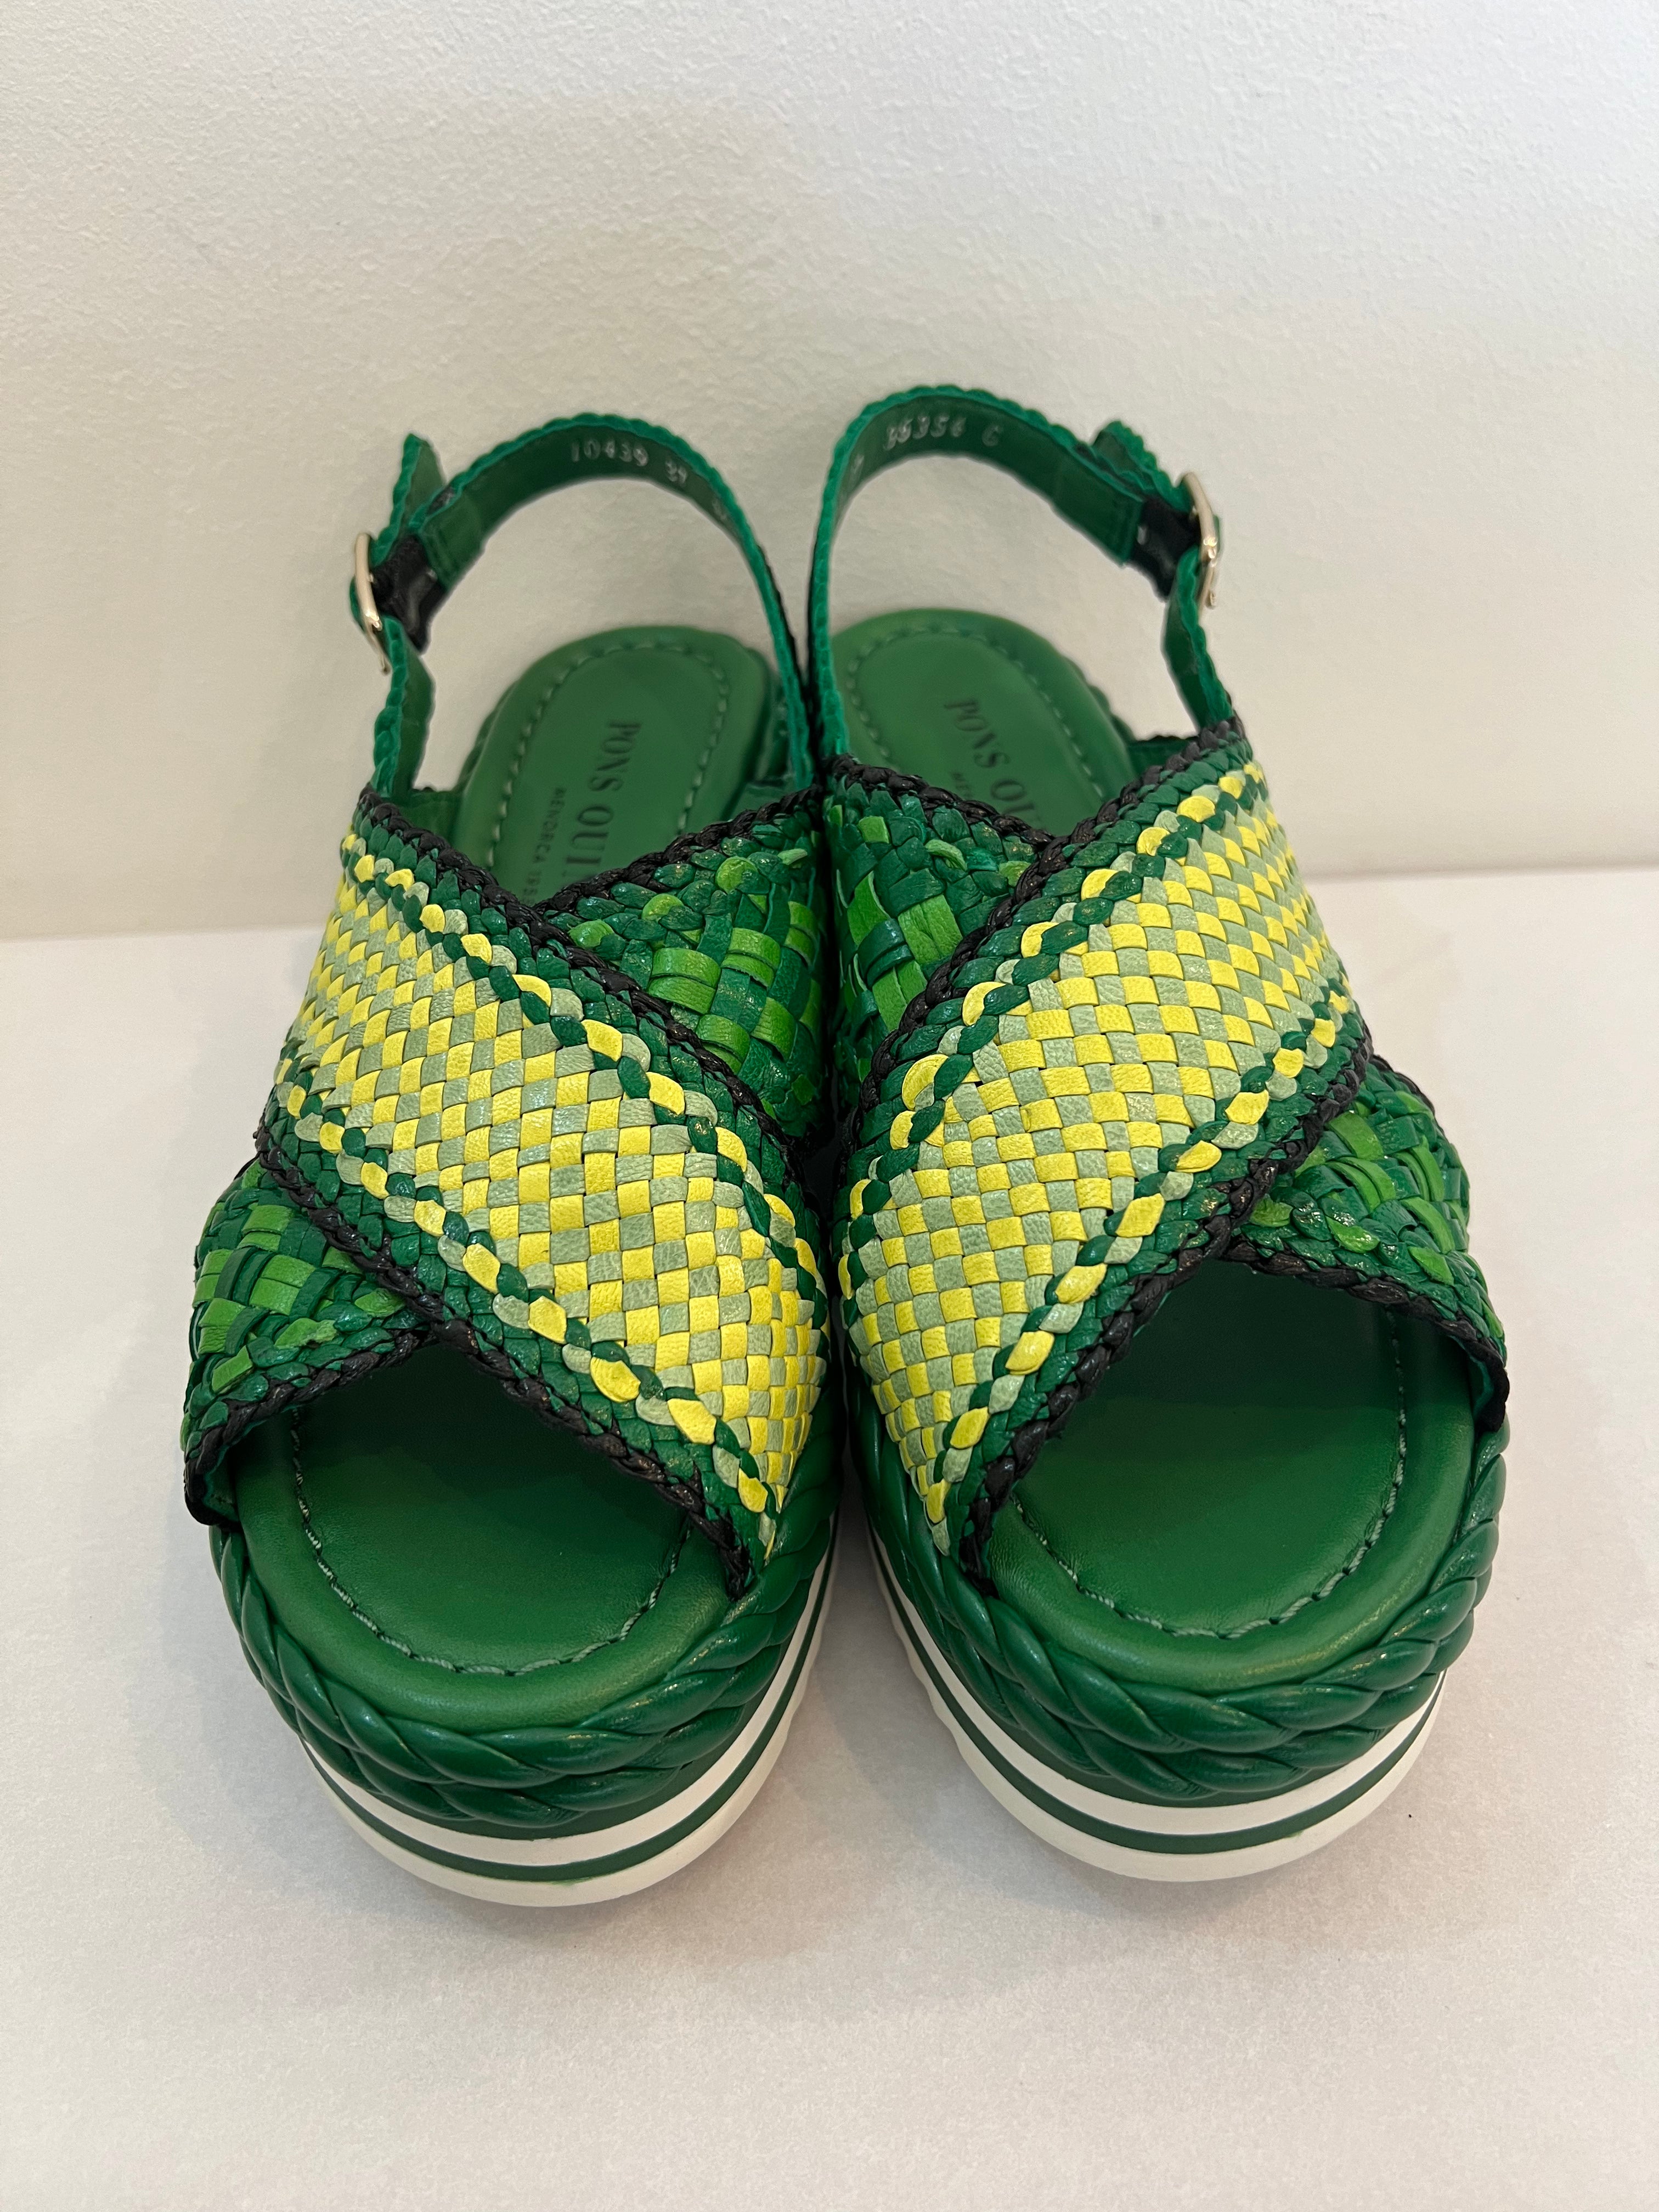 Hetre Alresford Hampshire Shoe Store Pons Quintana Green Woven Wedge Sandal